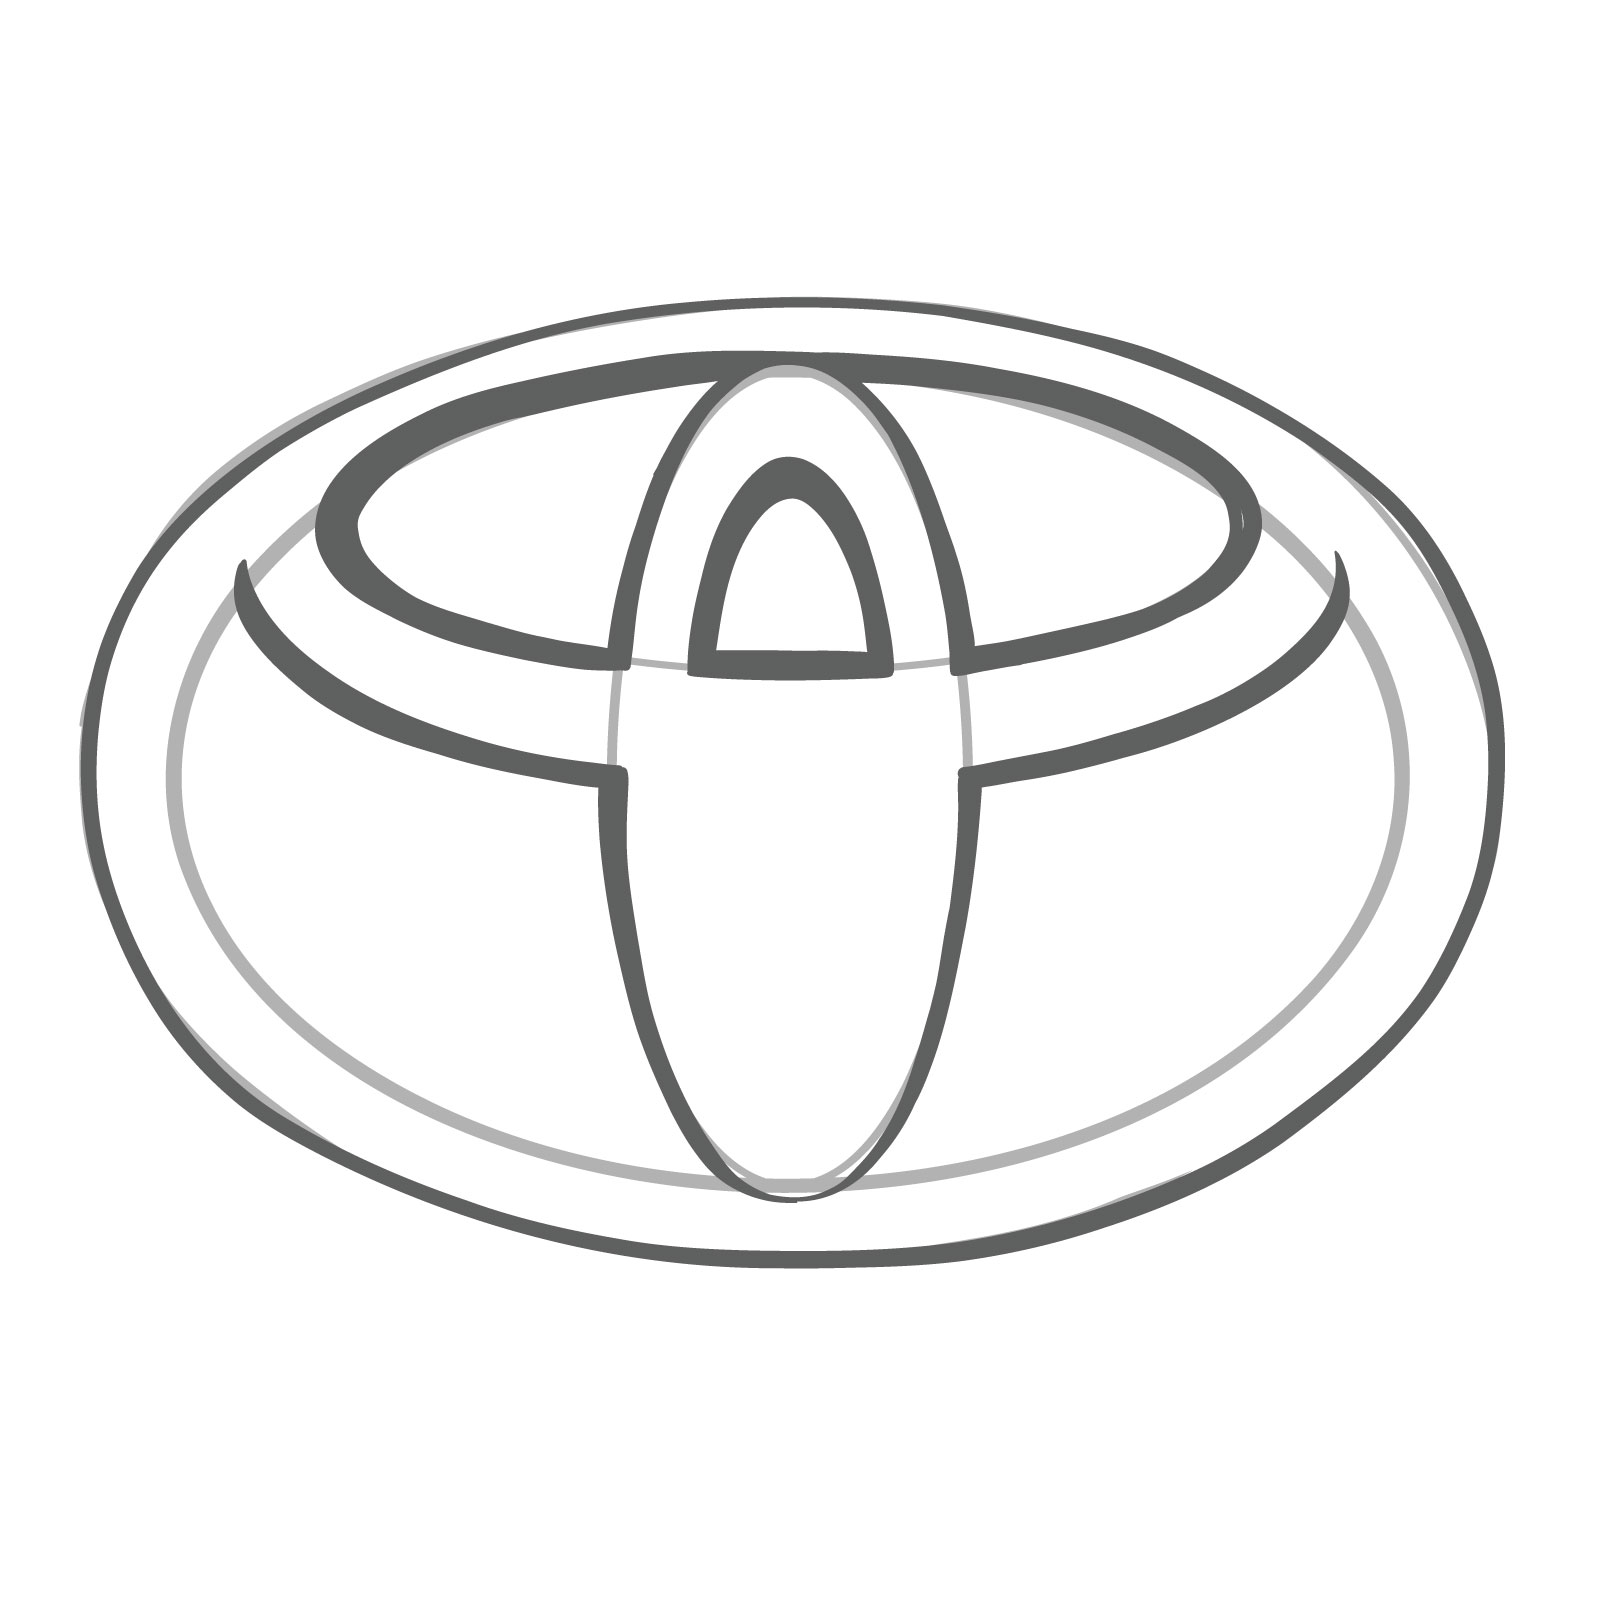 How to draw a Toyota logo - step 09